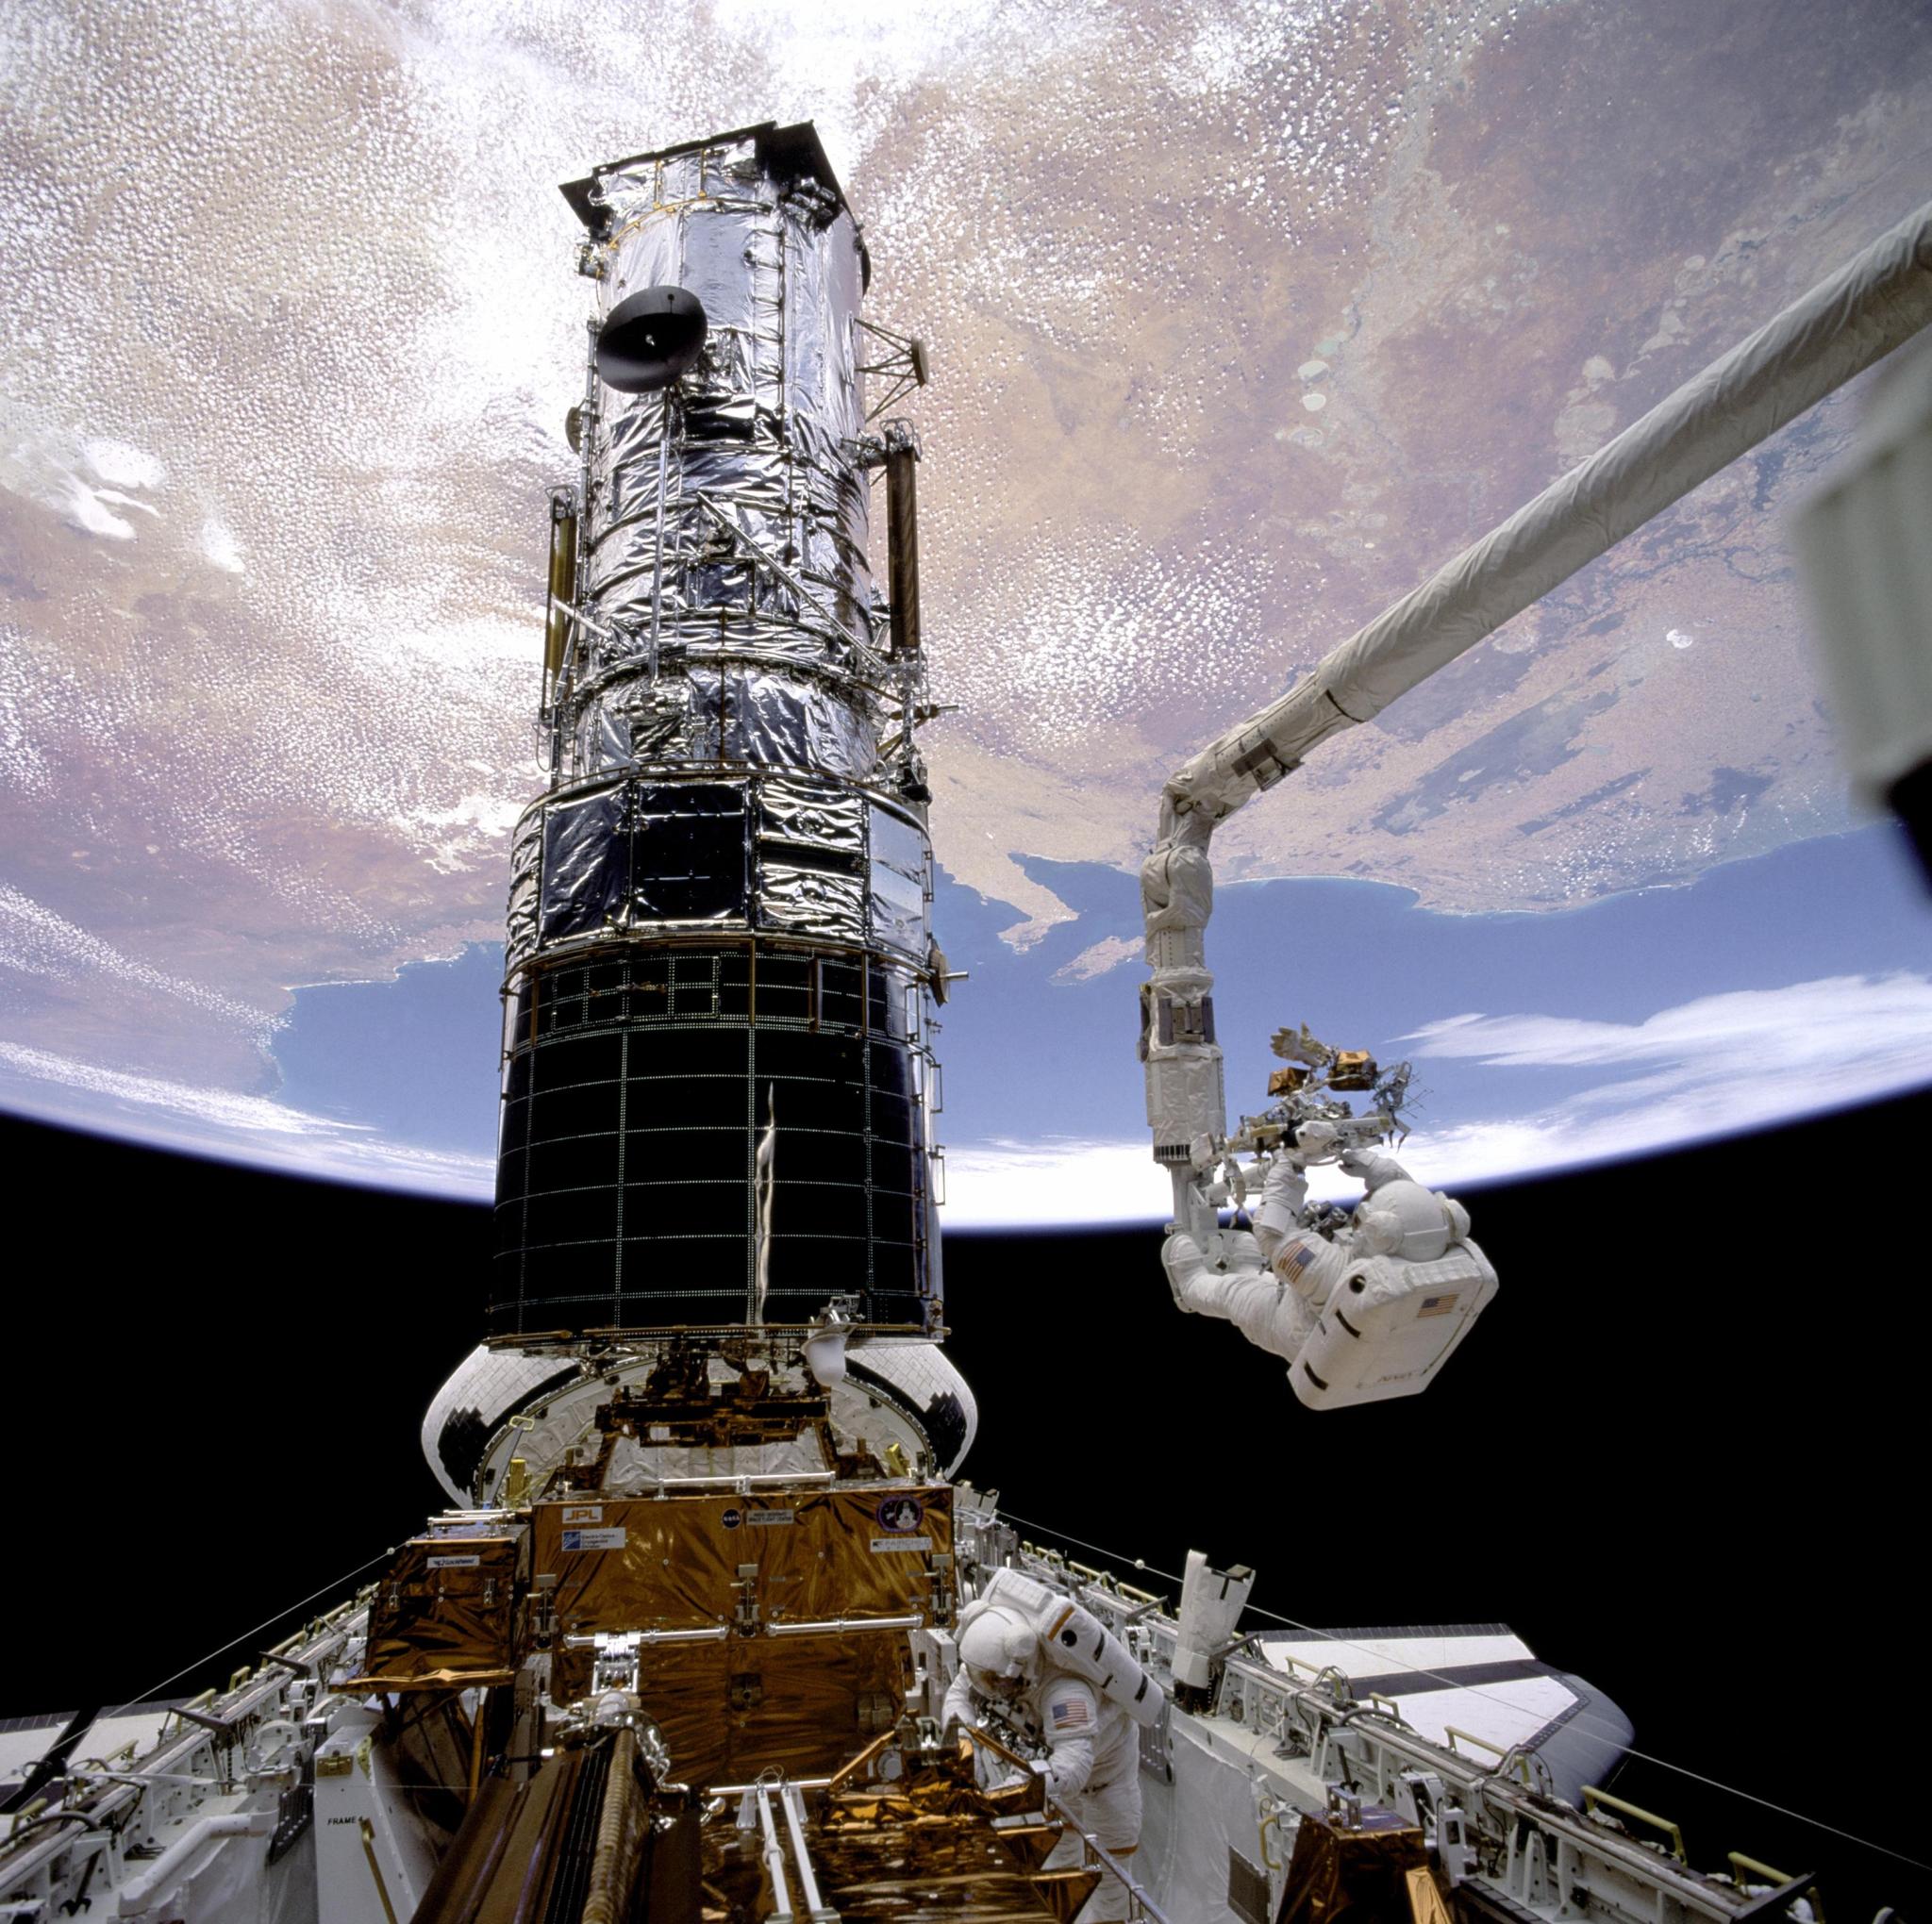 Astronaut on spacewalk outside space shuttle working on Hubble telescope.